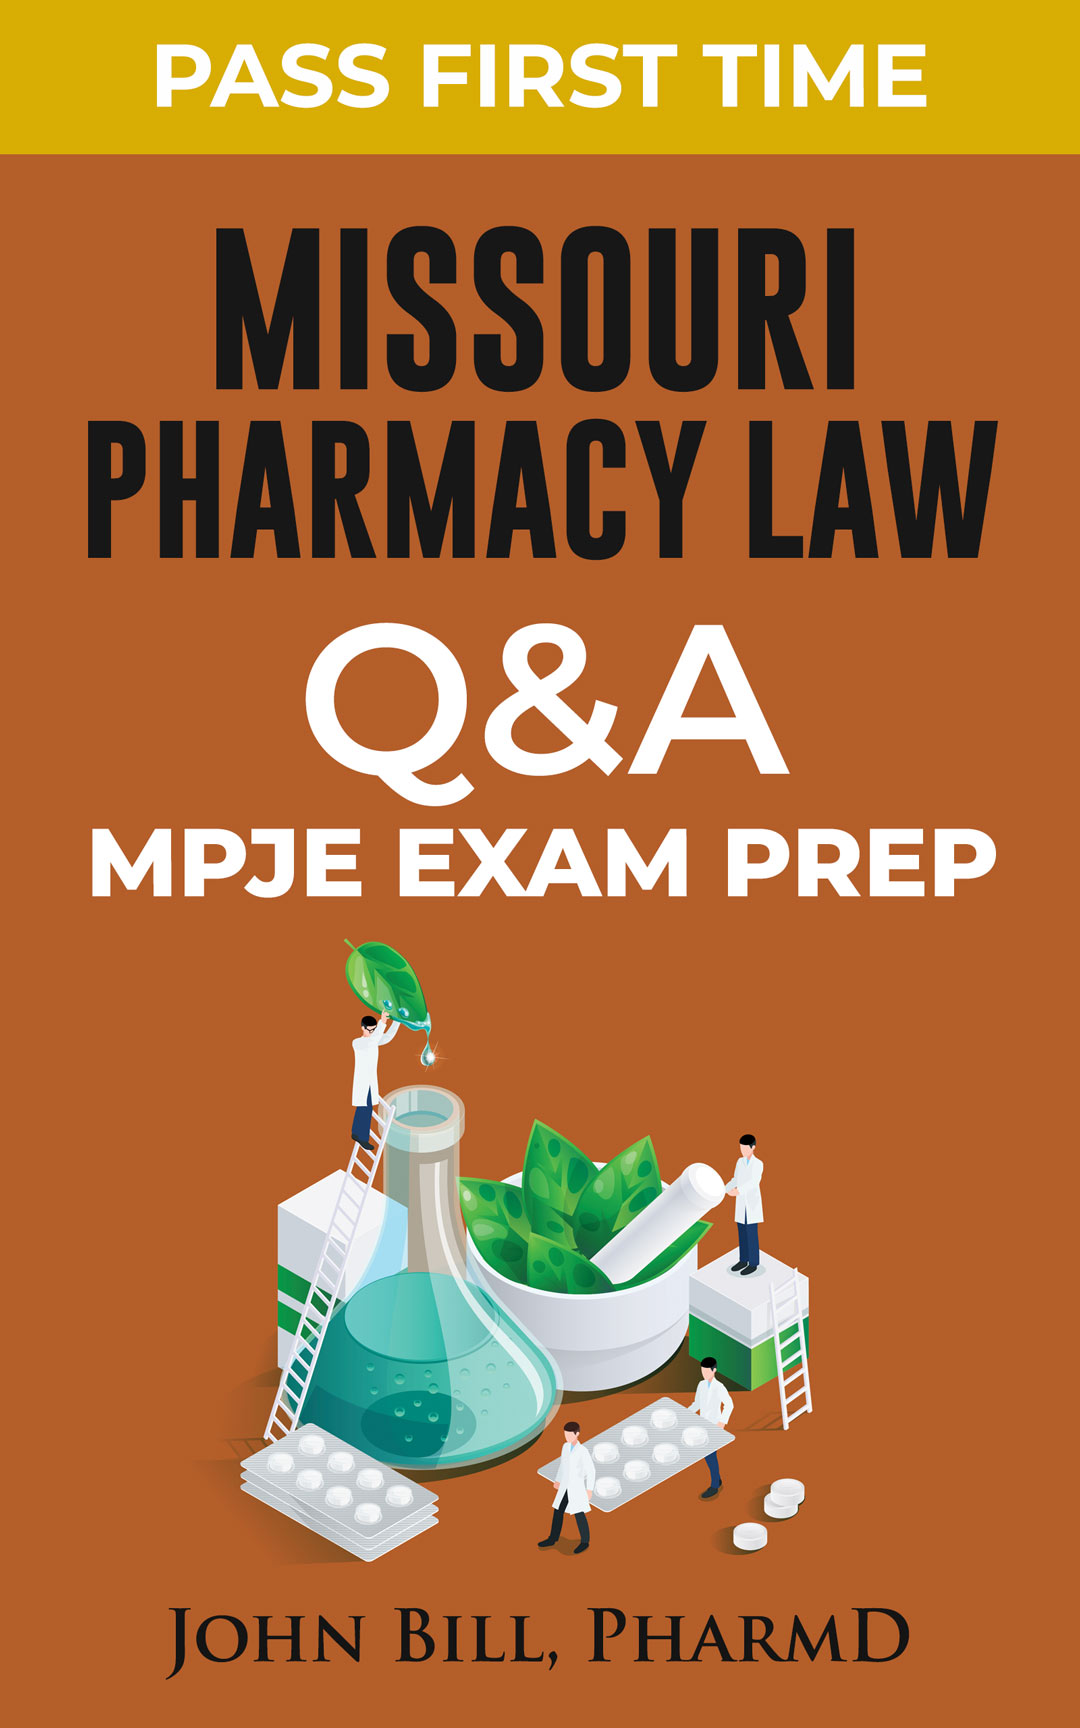 Missouri Pharmacy Law MPJE Exam Prep Q & A